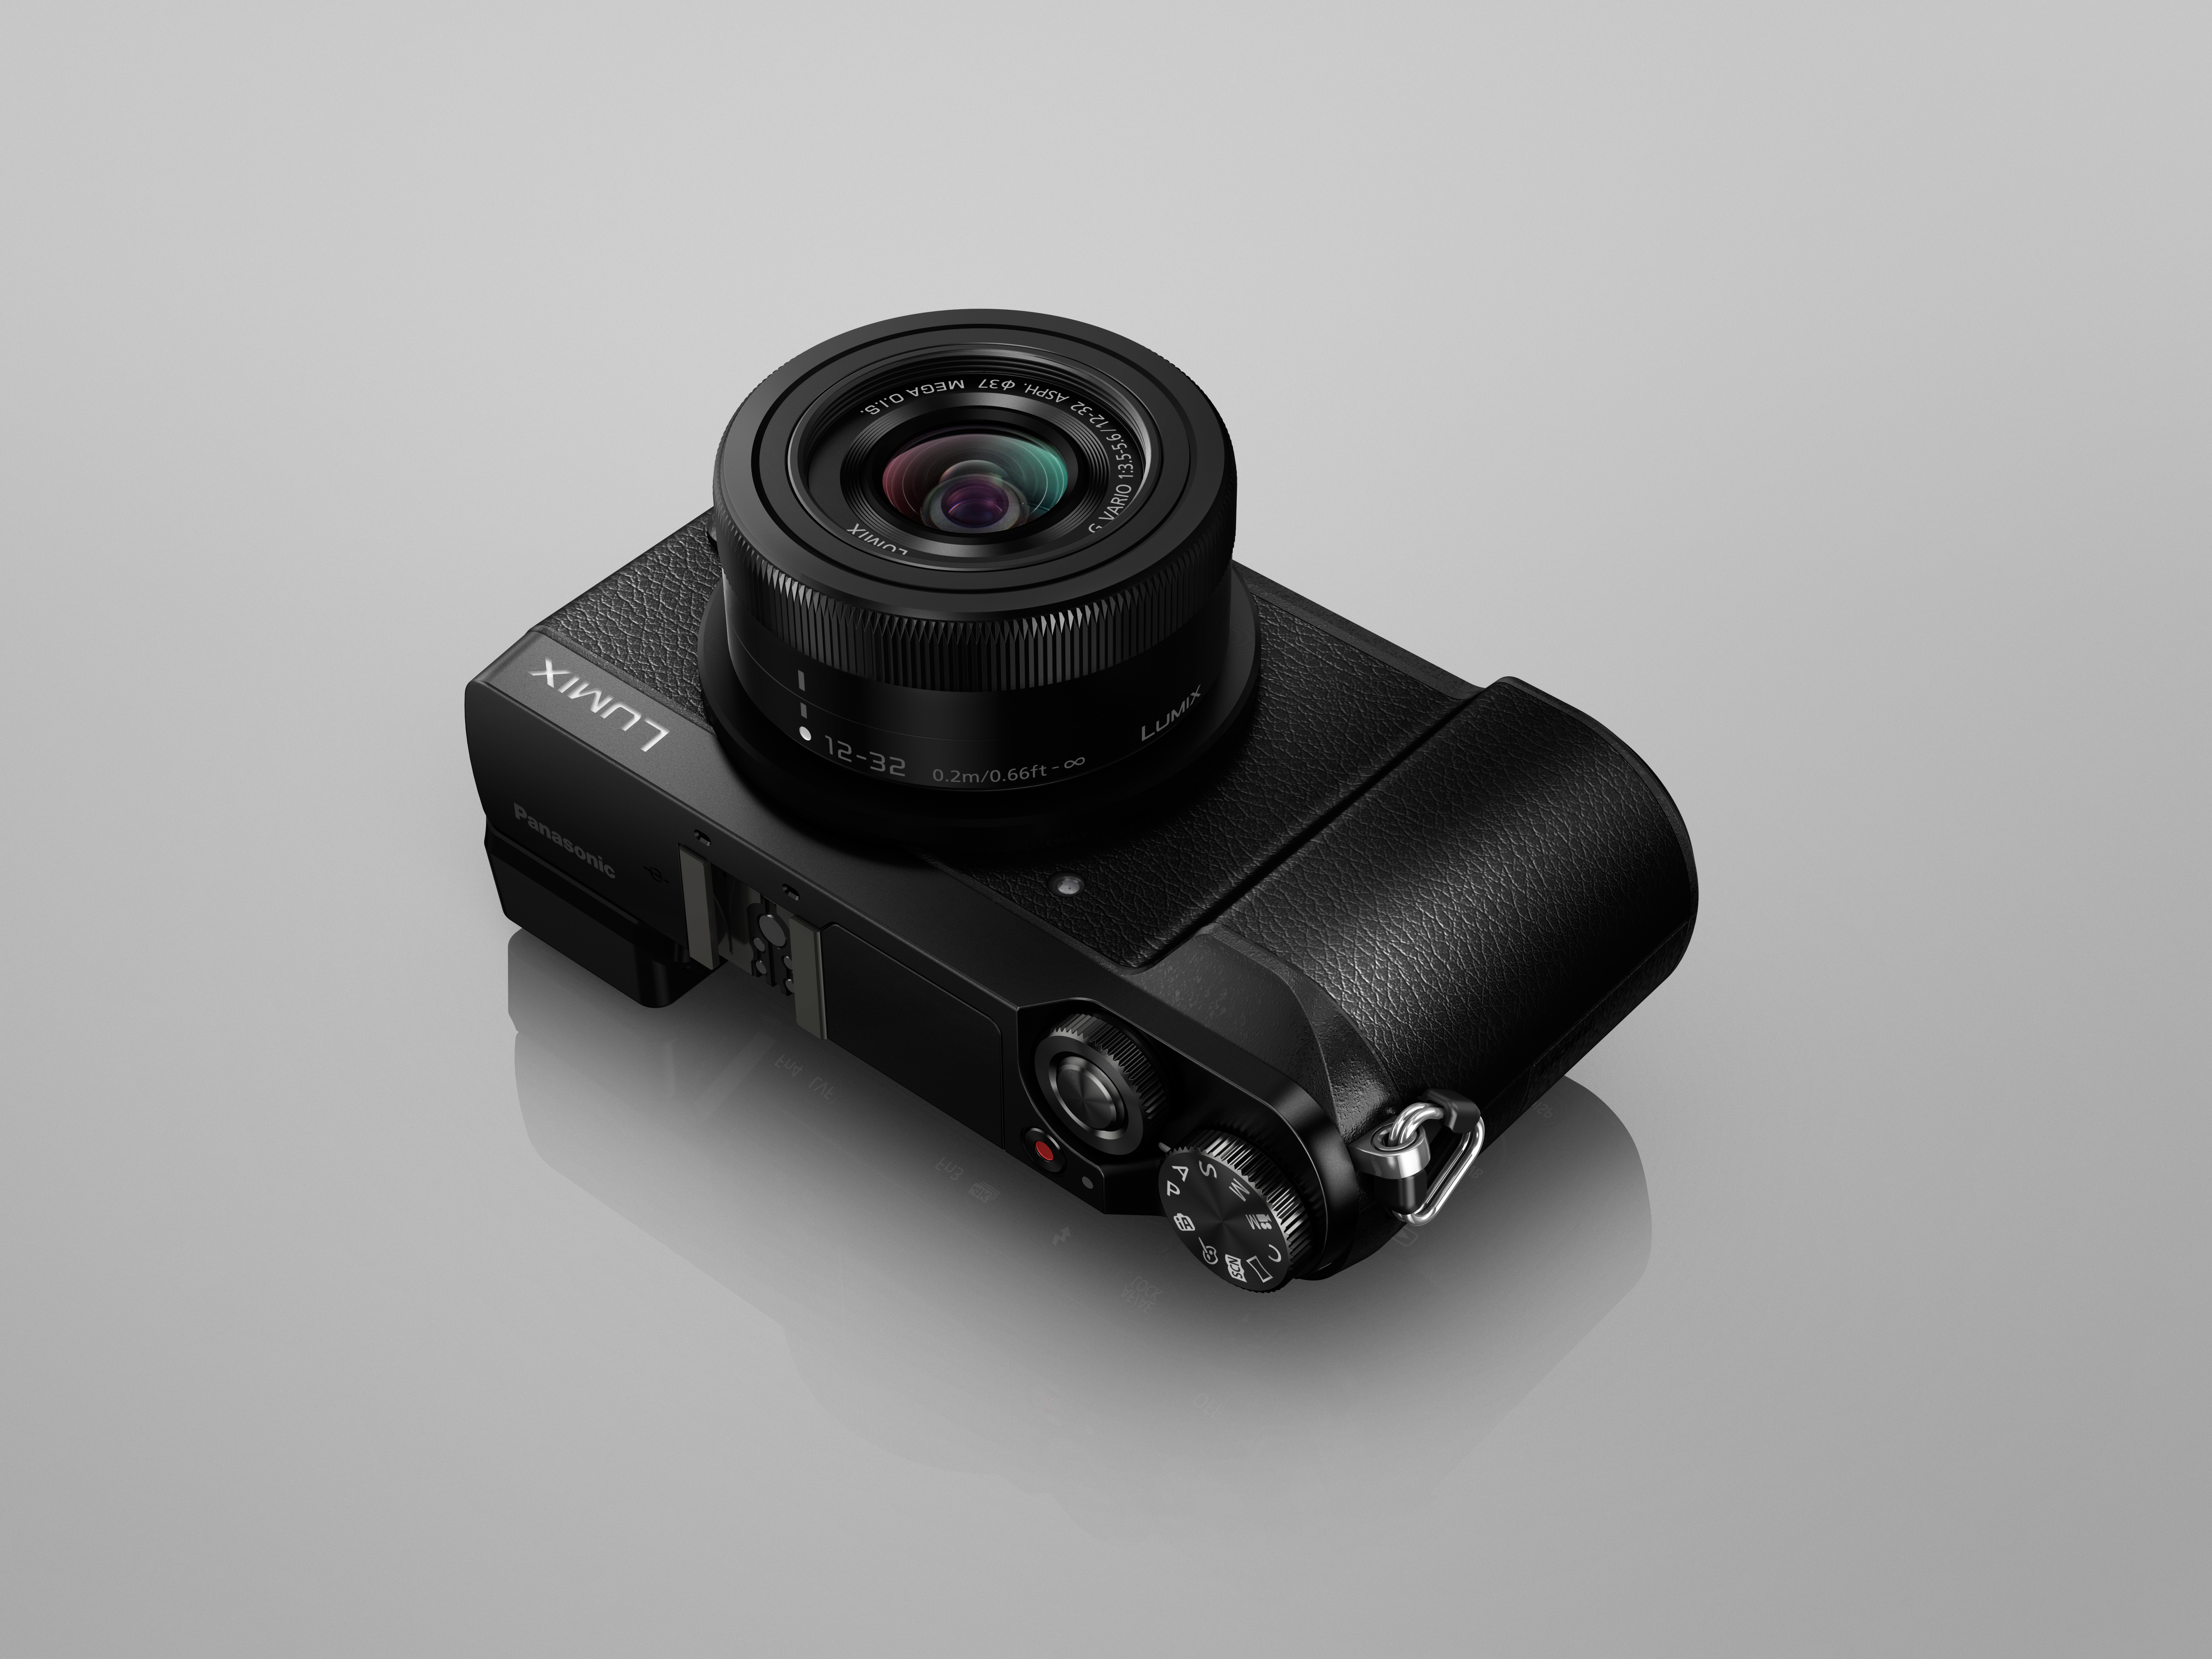 cm PANASONIC mm WLAN Touchscreen, 12-32 Display Objektiv Lumix Systemkamera , DMC-GX80K 7,5 mit